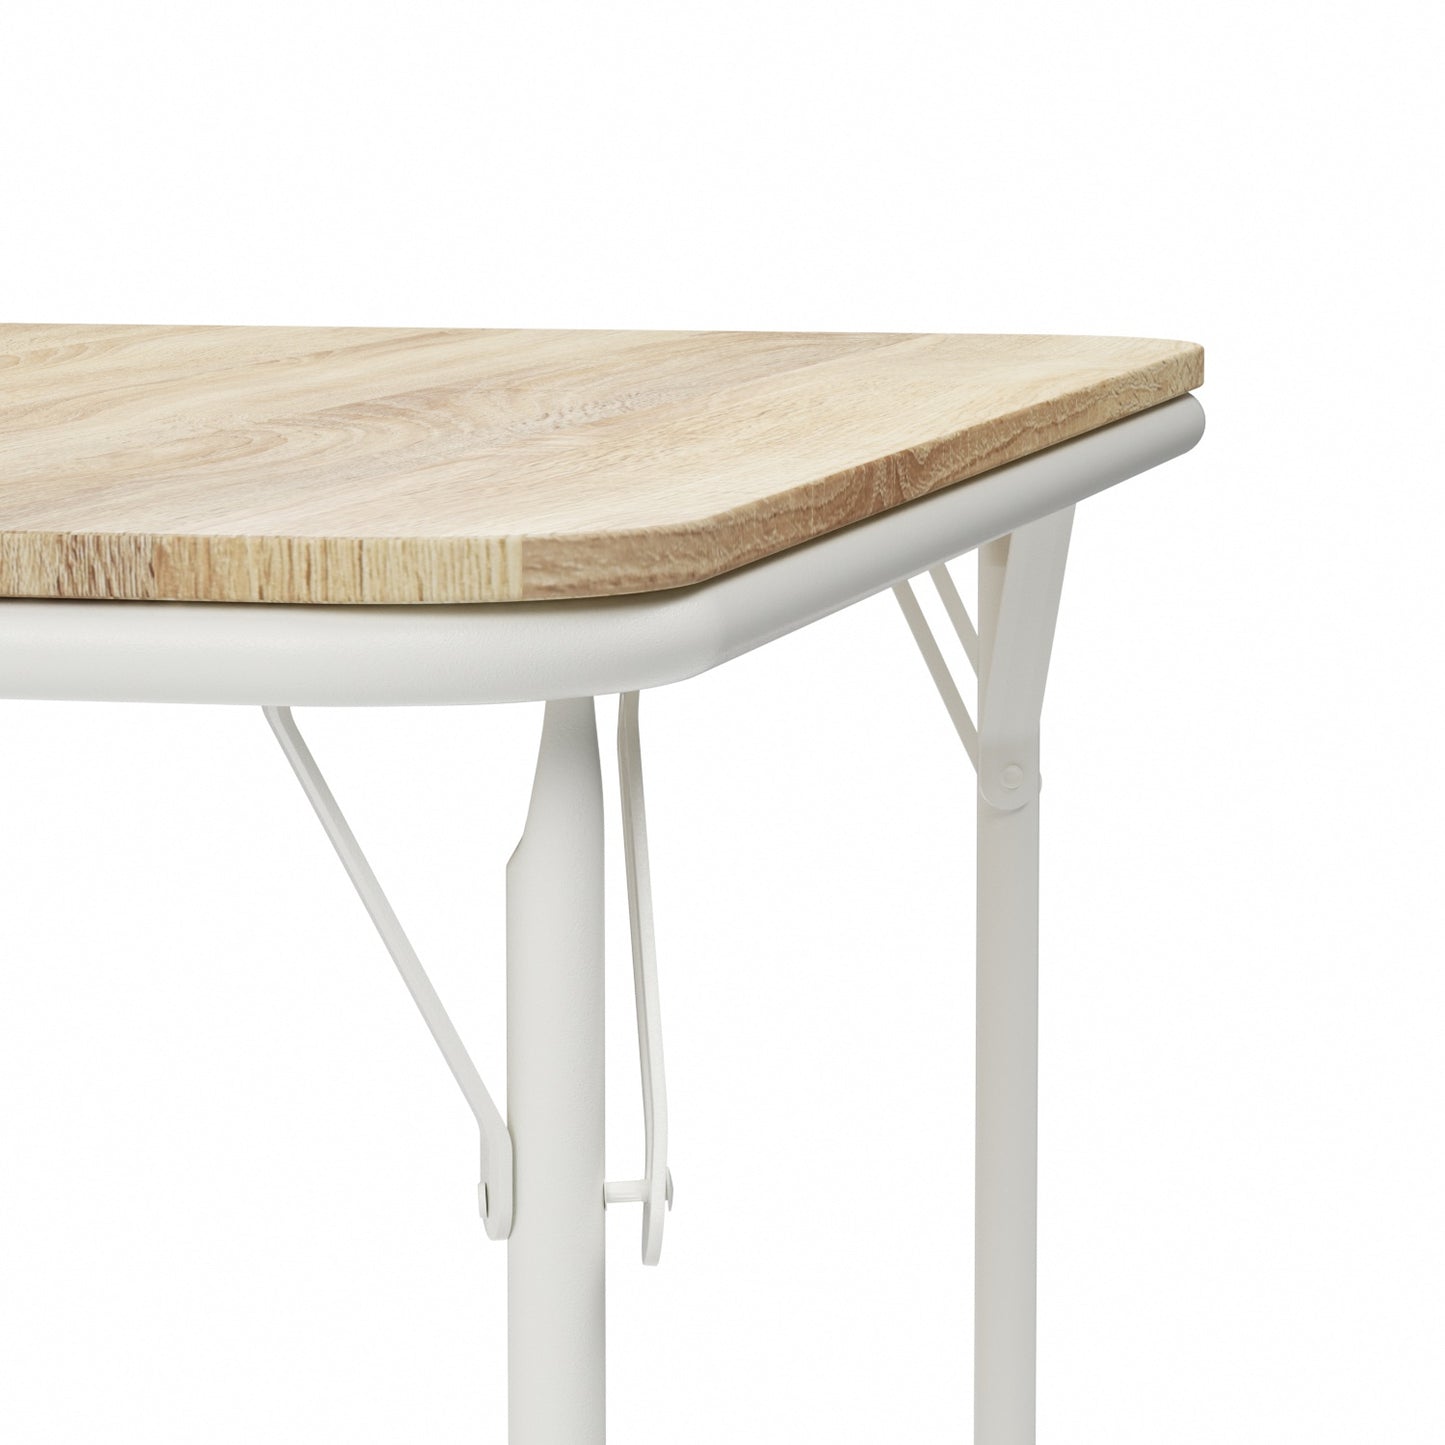 FERN 86cm Dining Table With White Iron Legs-Light Oak Grain